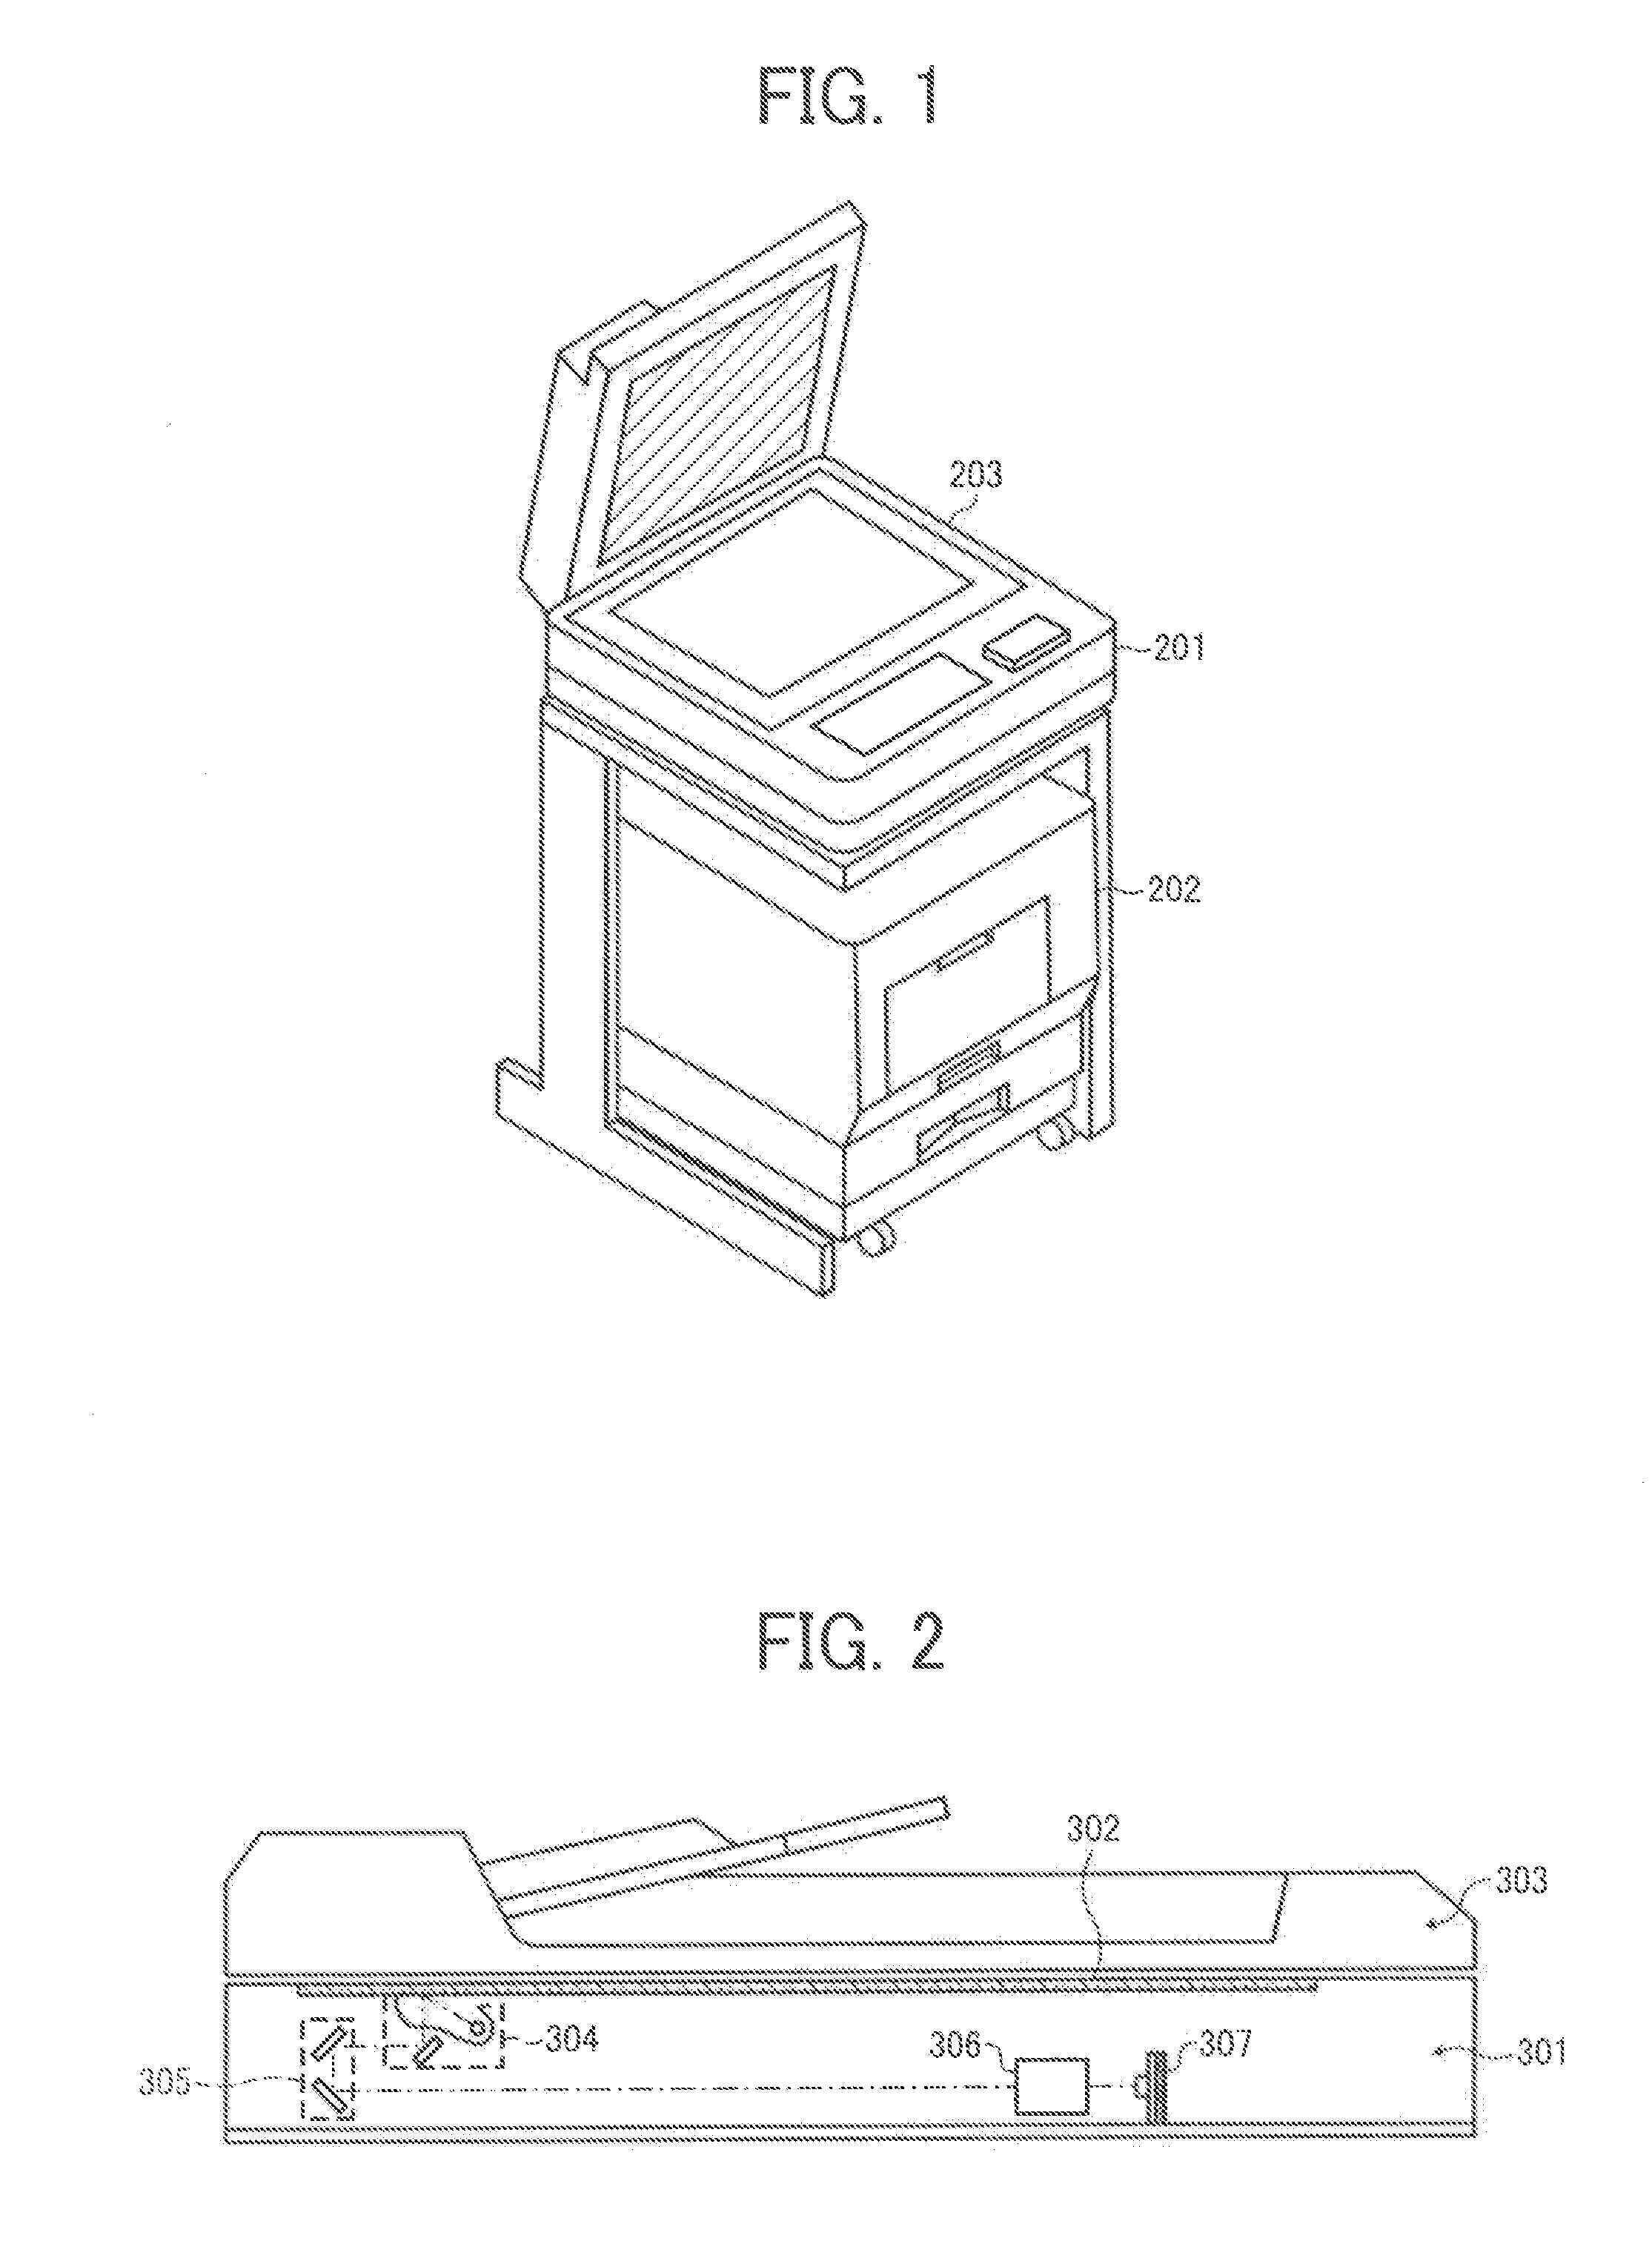 Image forming apparatus, control method of image forming apparatus, and computer program product